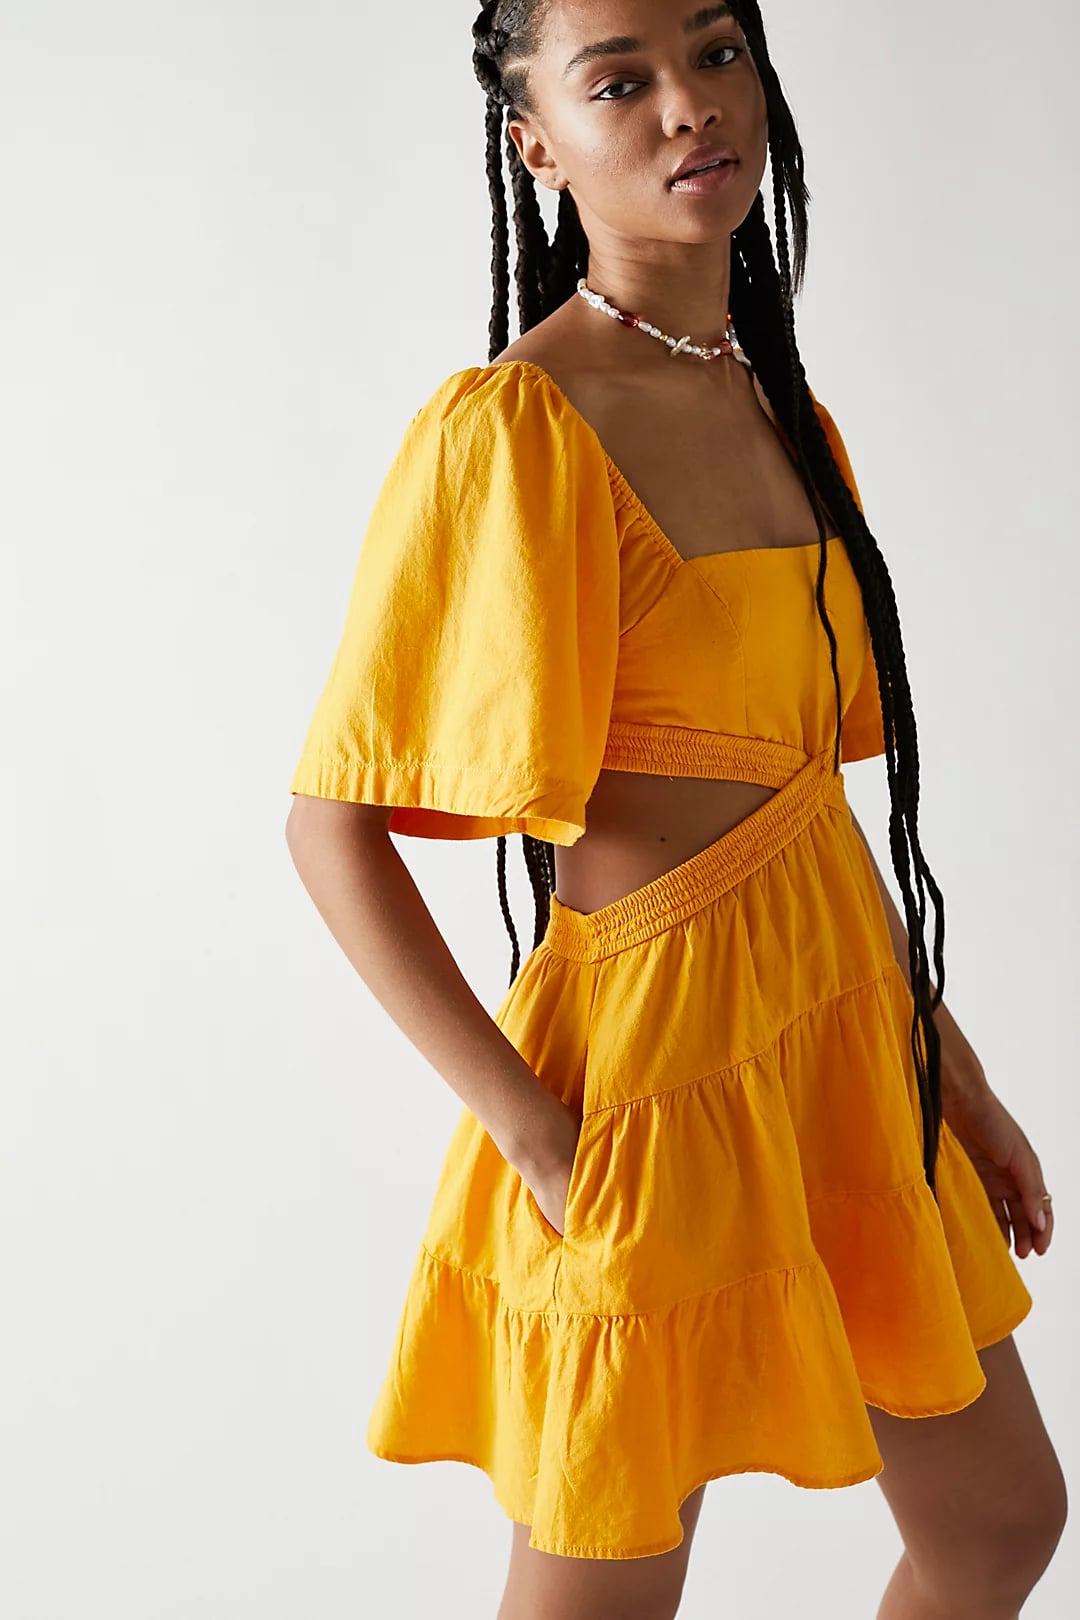 2023 Summer Womens Sleeveless Chiffon Mini Dress Sexy Casual & Beach Raskol  Apparel CD02 From Juzhen123, $8.85 | DHgate.Com